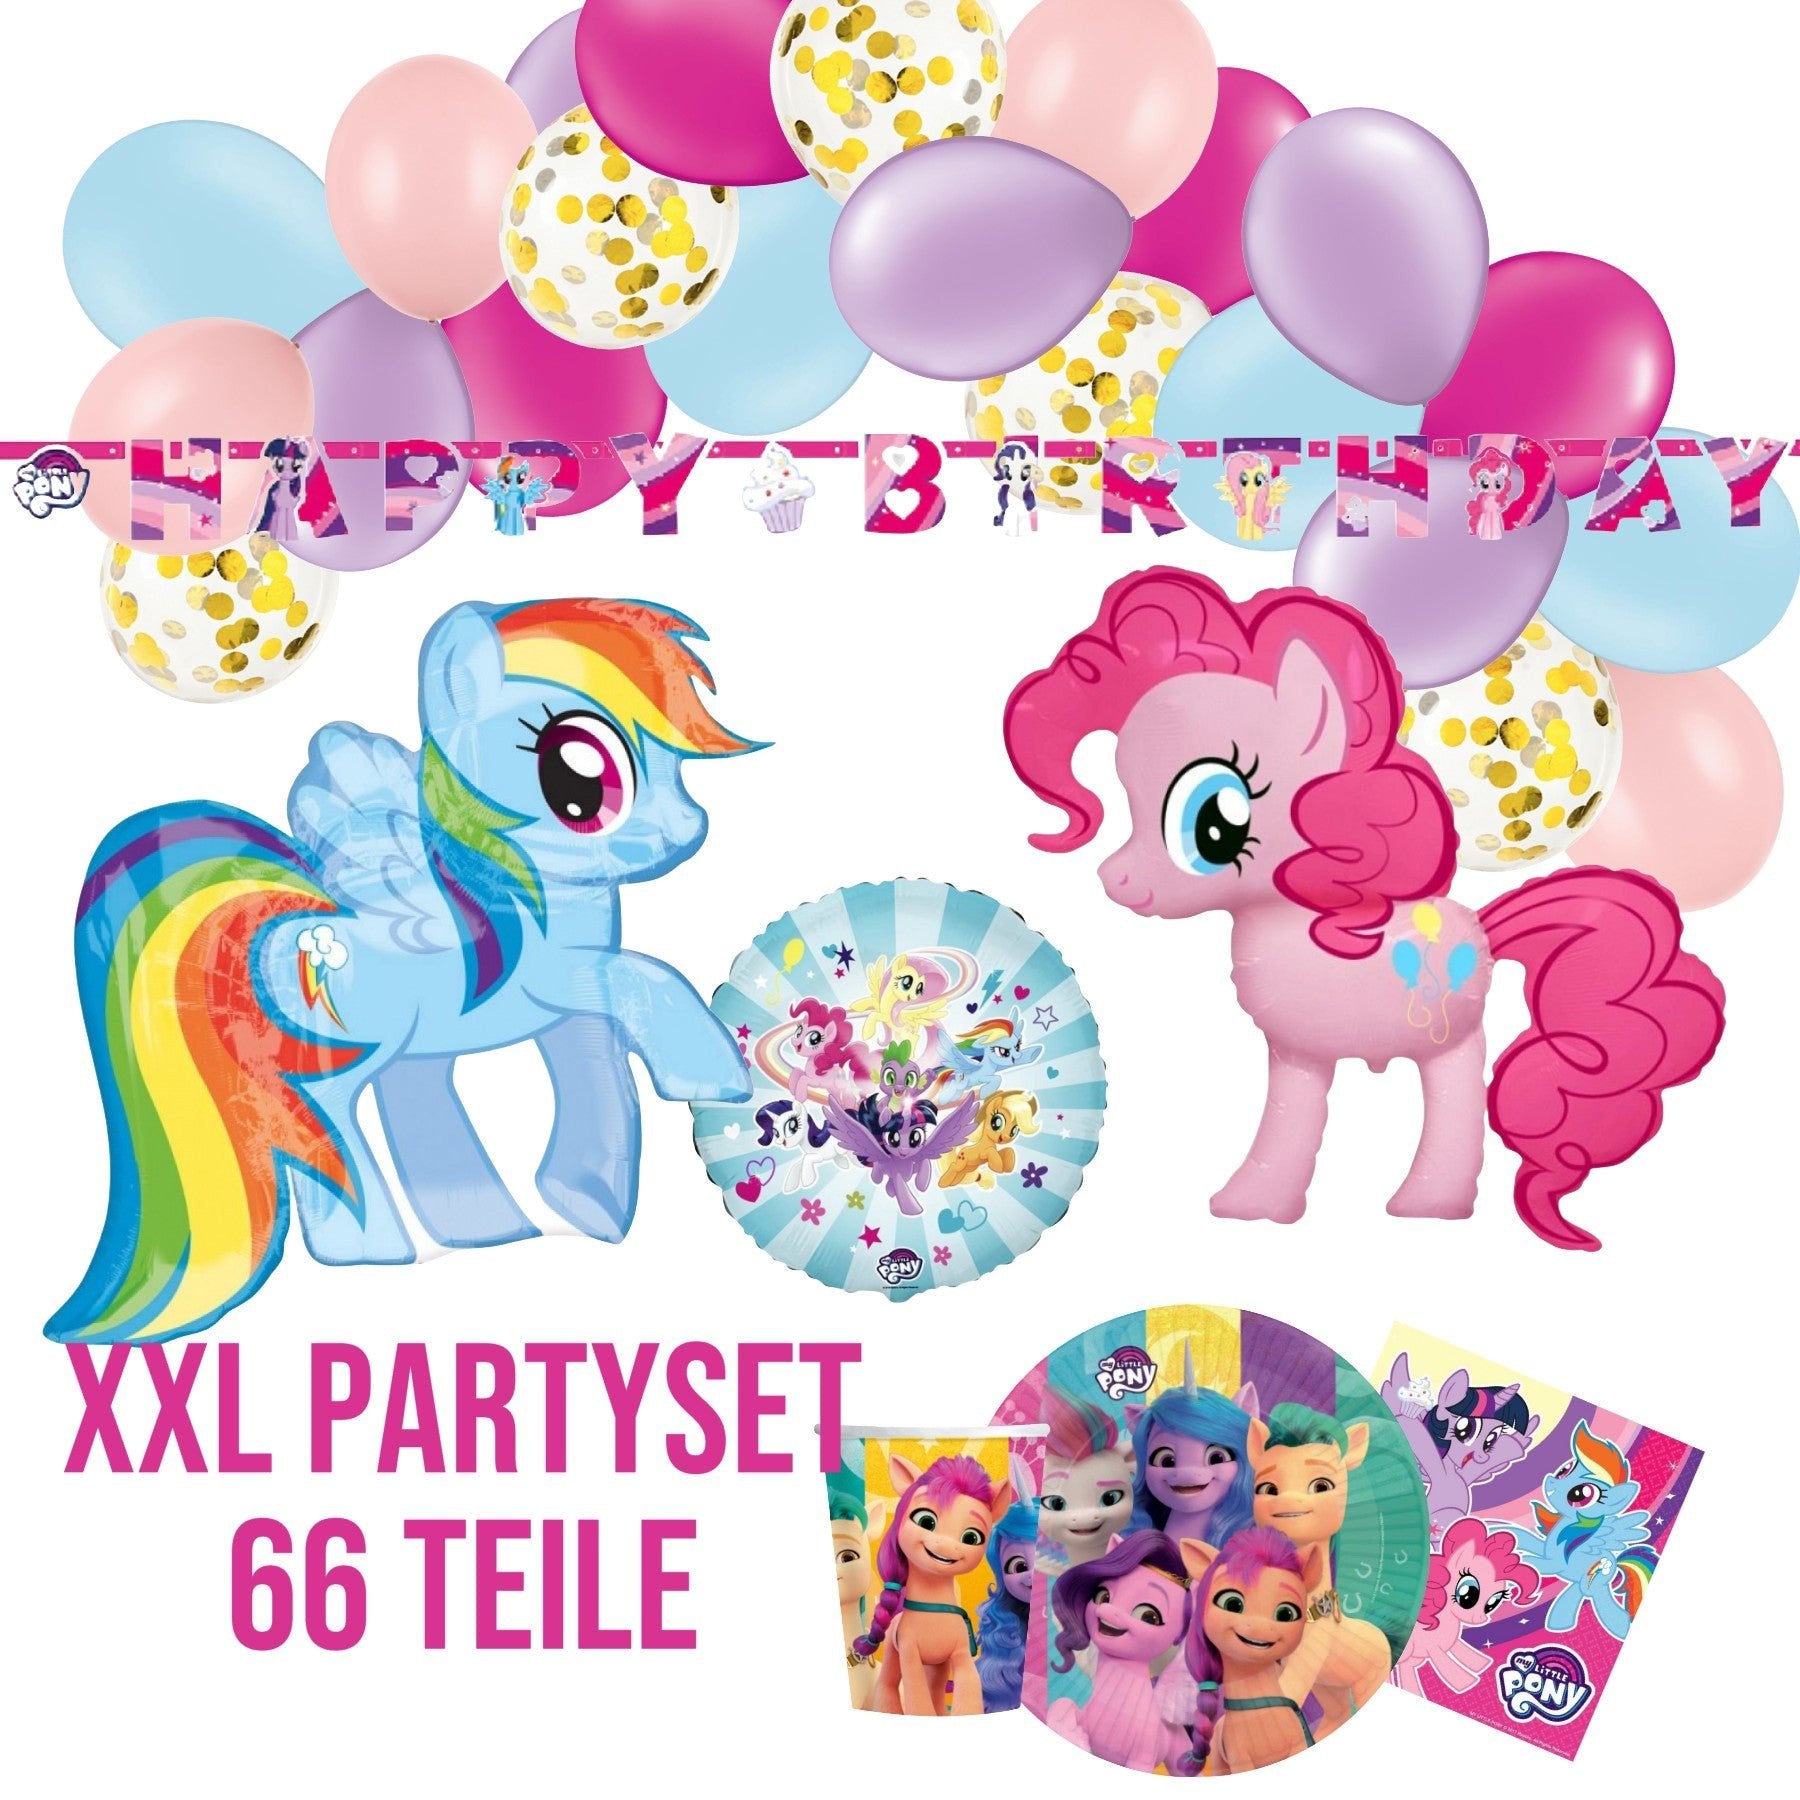 XXL Partykarton "My little Pony" 66-teilig - Party im Karton